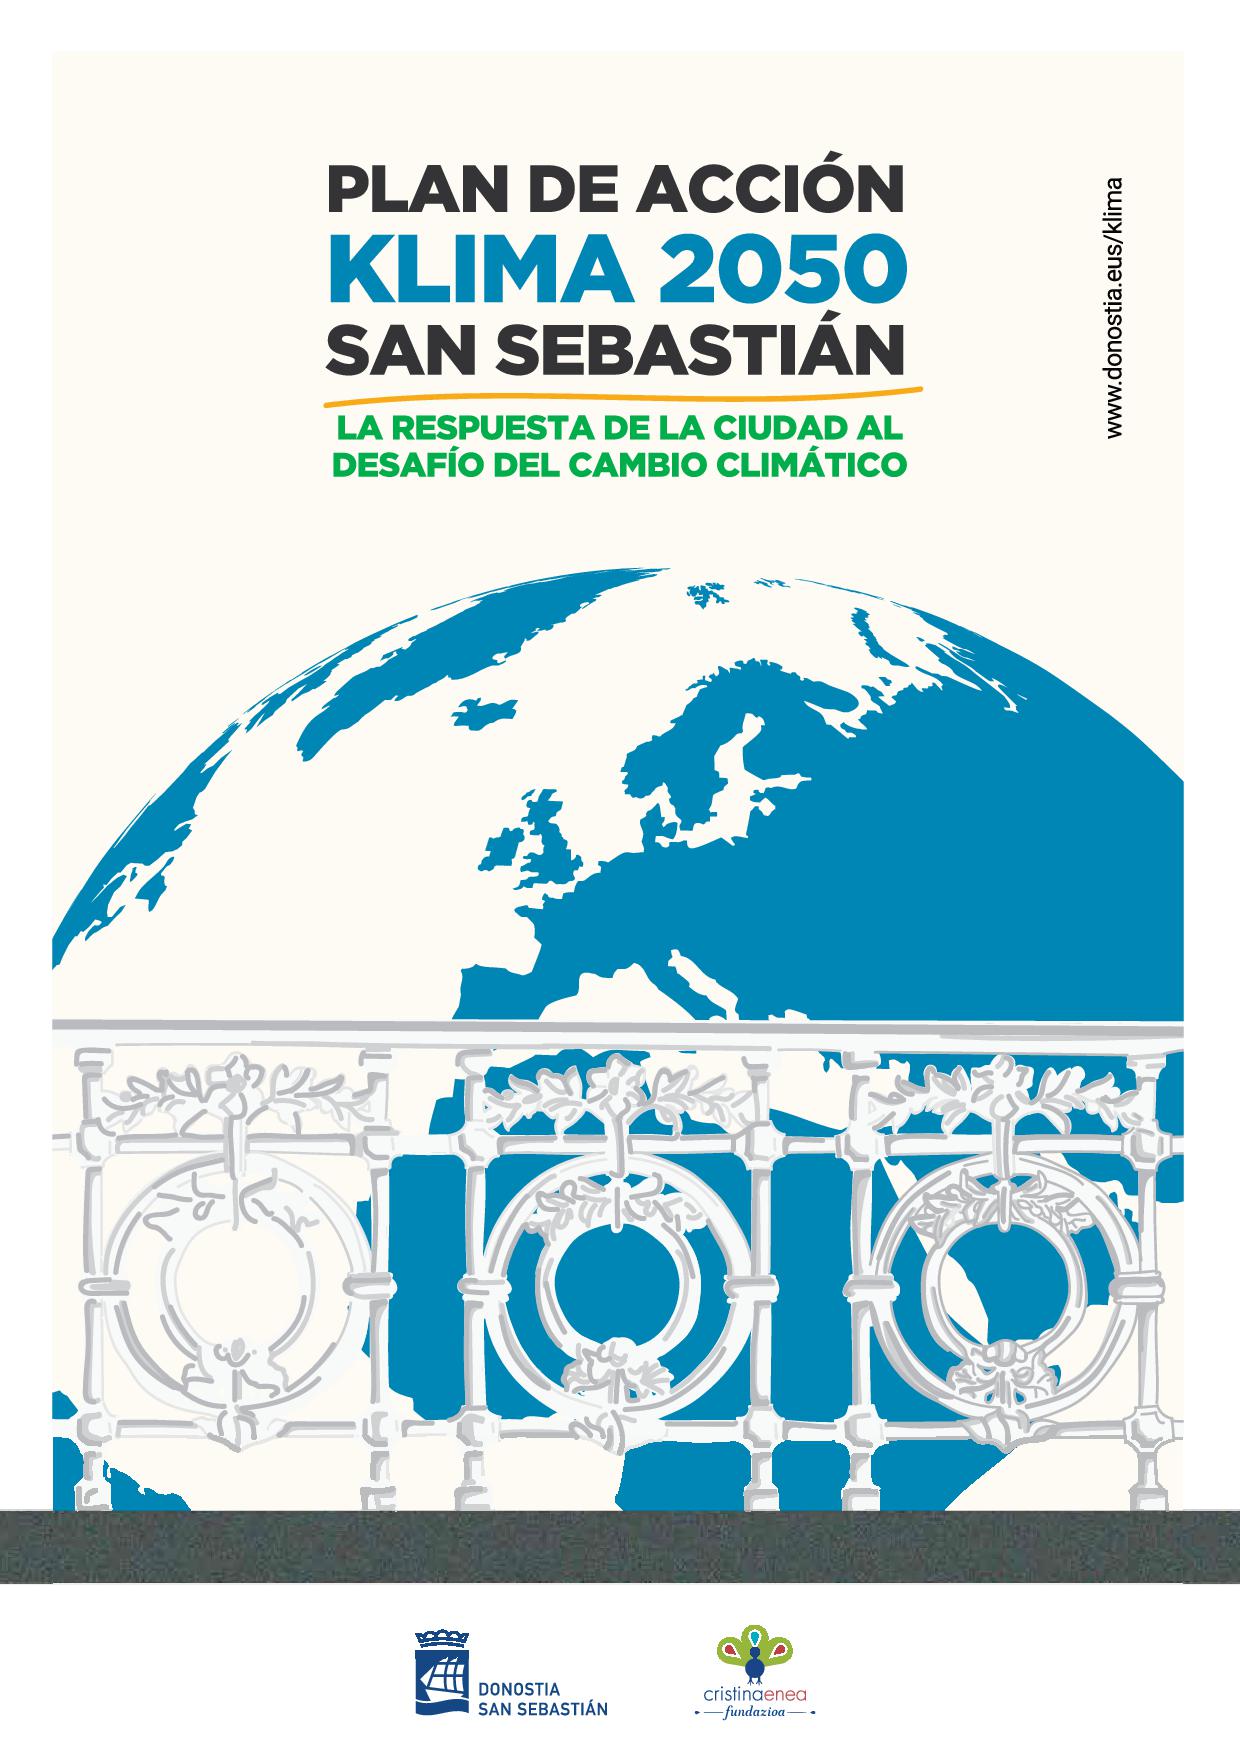 Plan de acción klima 2050 San Sebastián